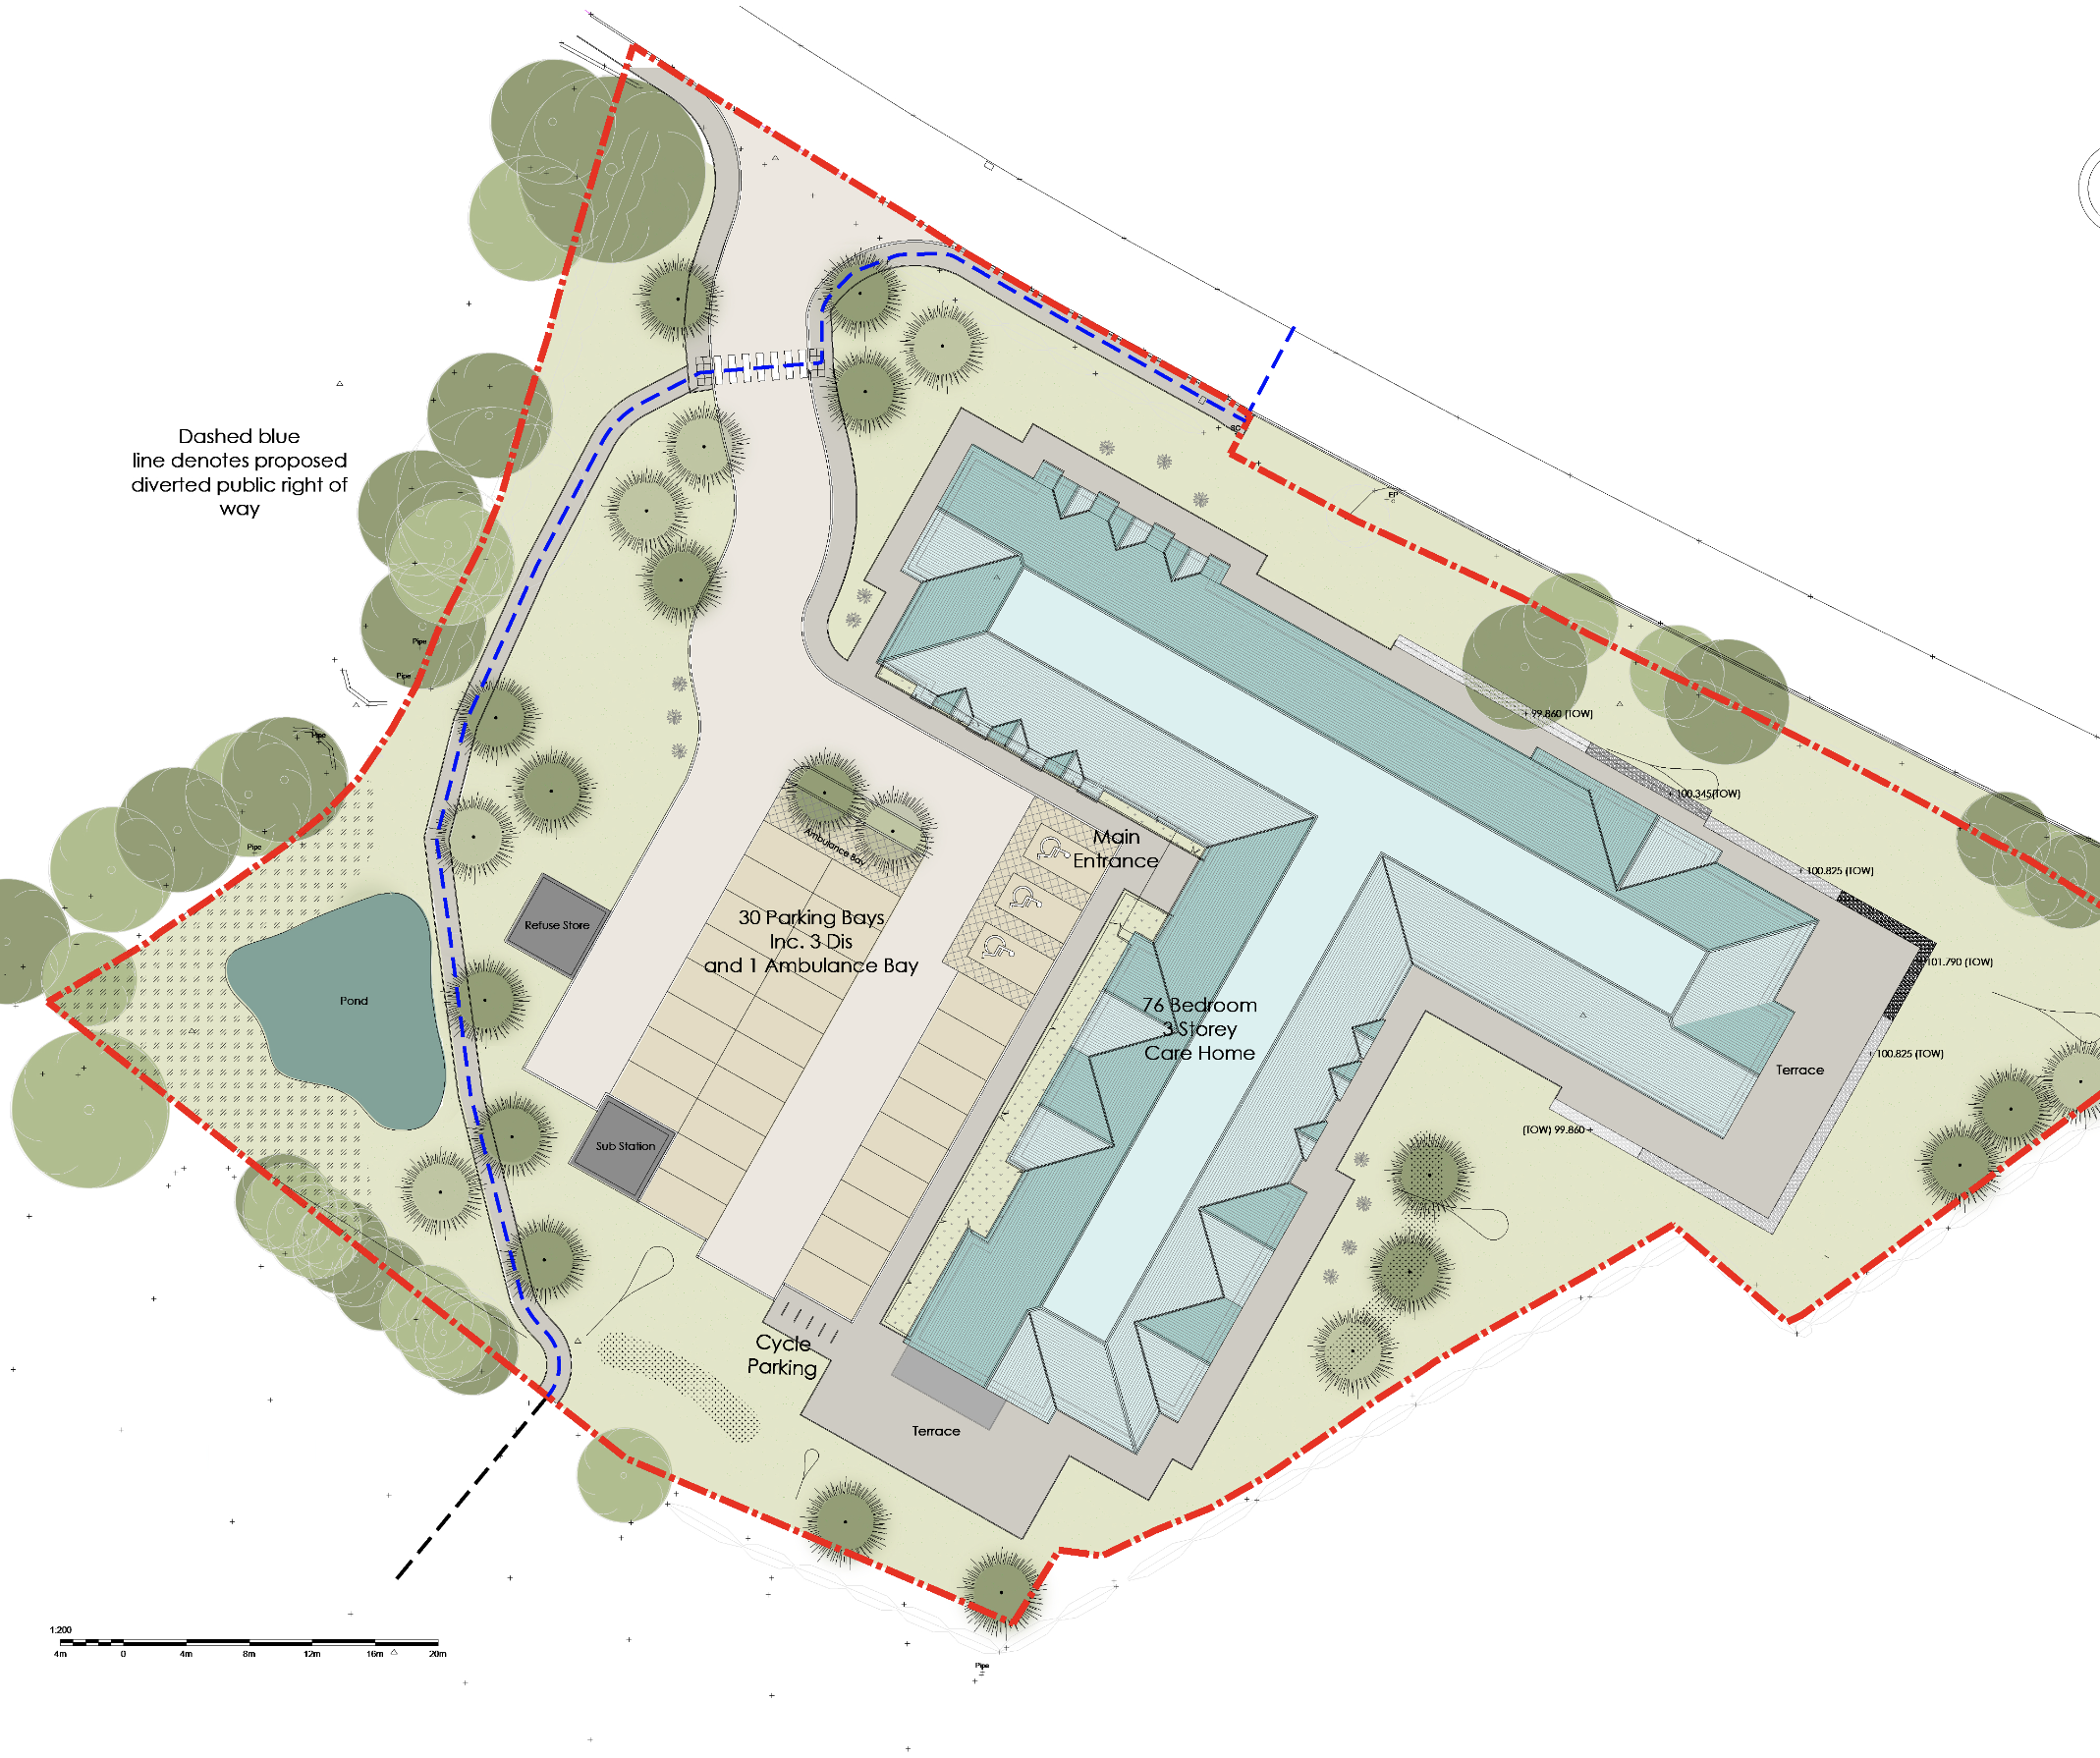 Care Home in Sutton Coldfield - Site Plan